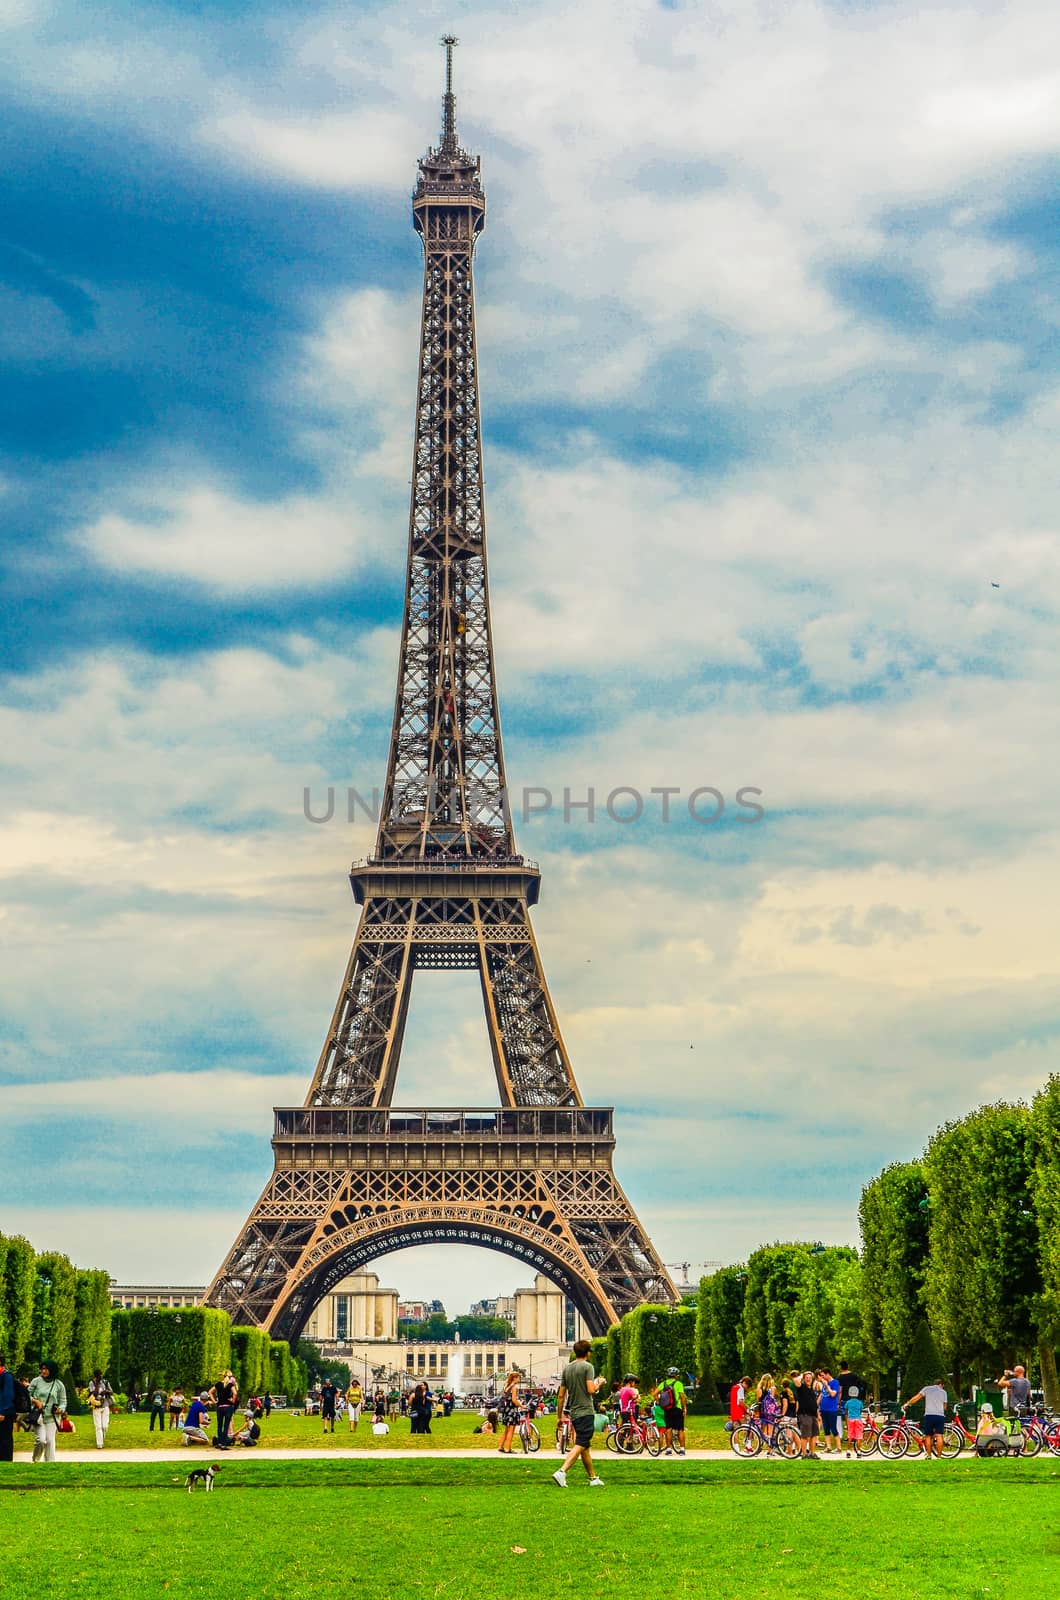 Eiffel Tower in Paris, France by chernobrovin